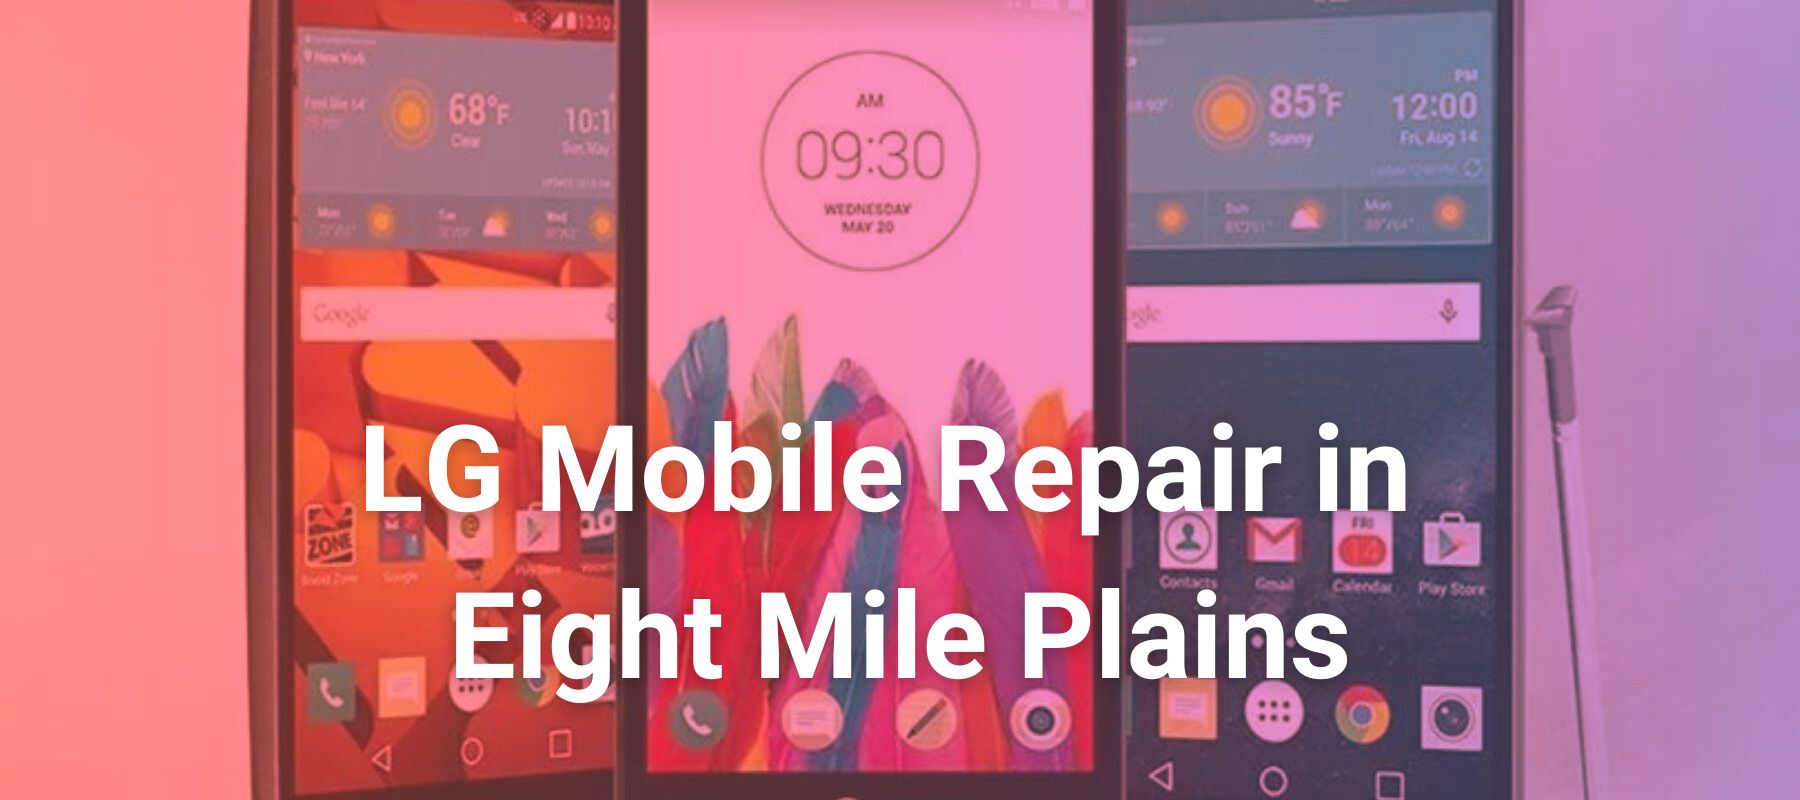 LG Mobile Repair in Eight Mile Plains